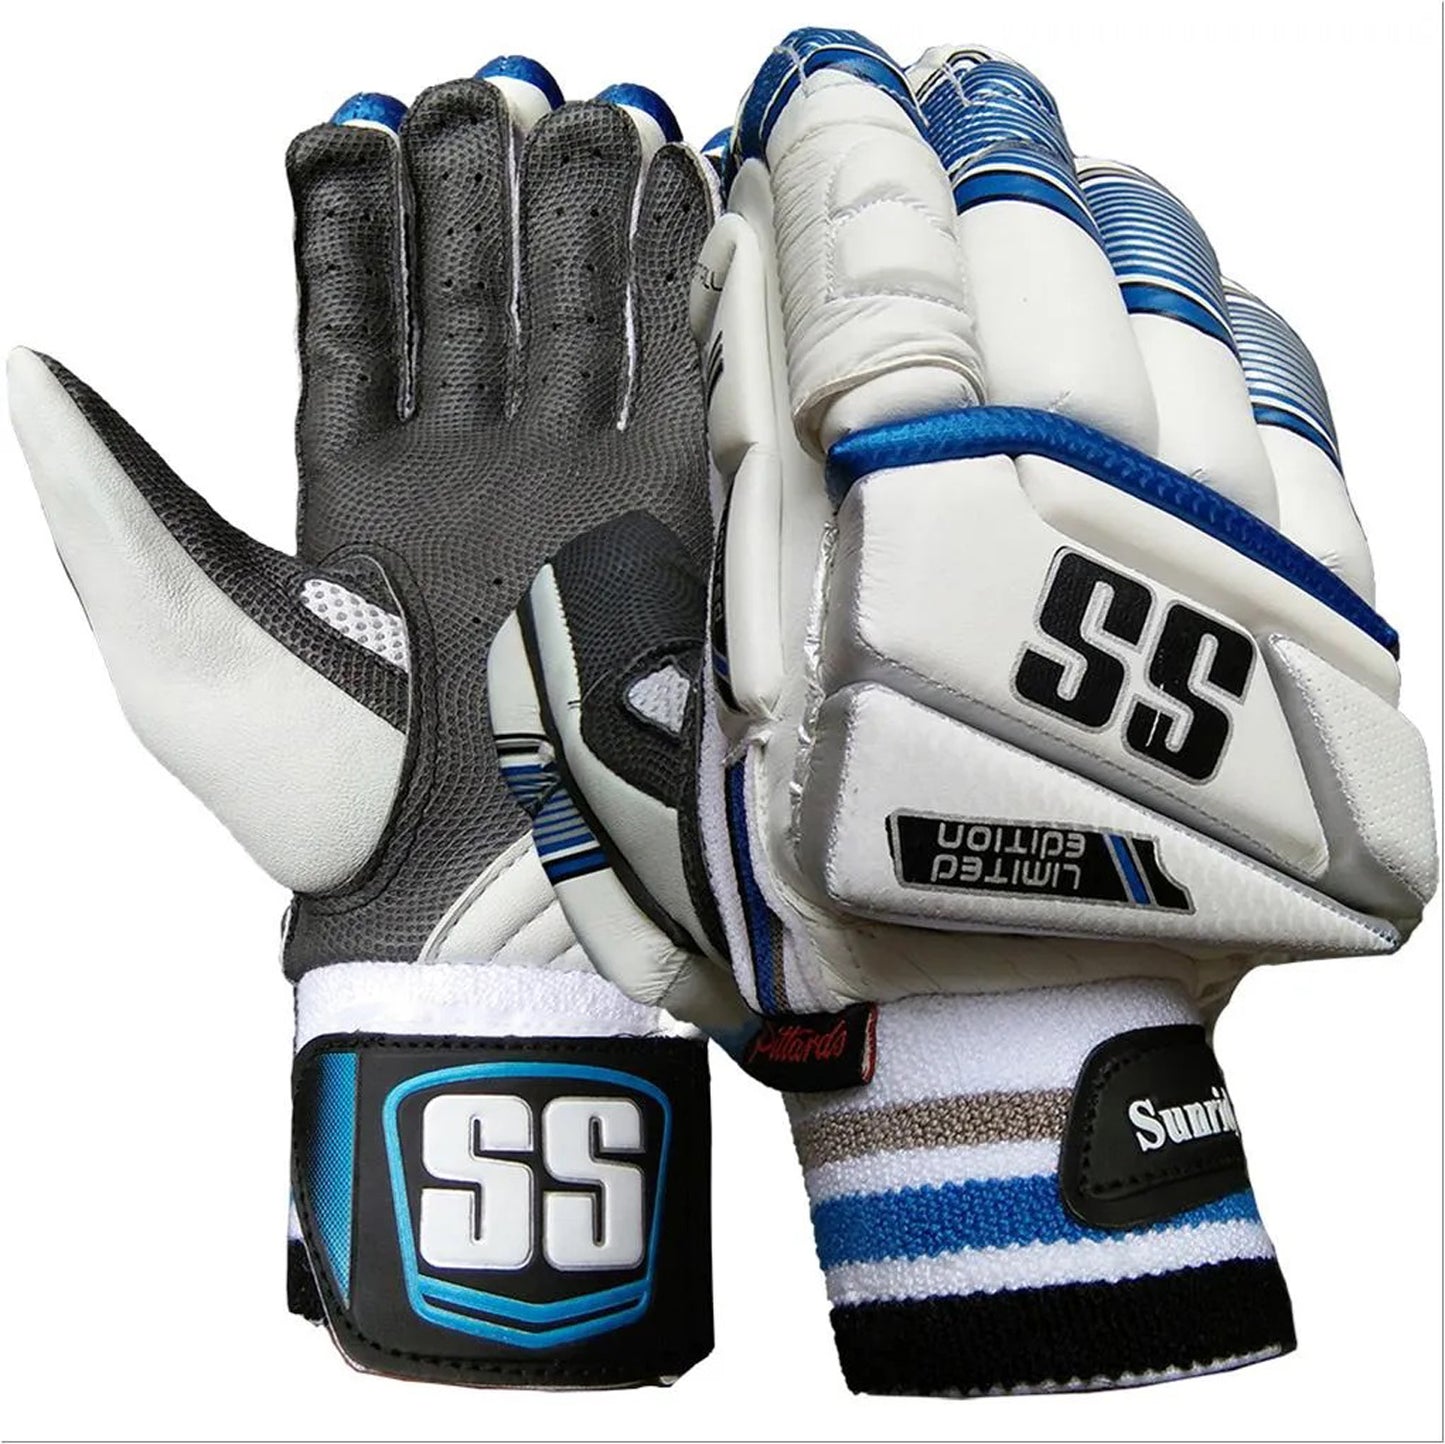 SS Limited Edition RH Batting Gloves, White/Blue - Best Price online Prokicksports.com